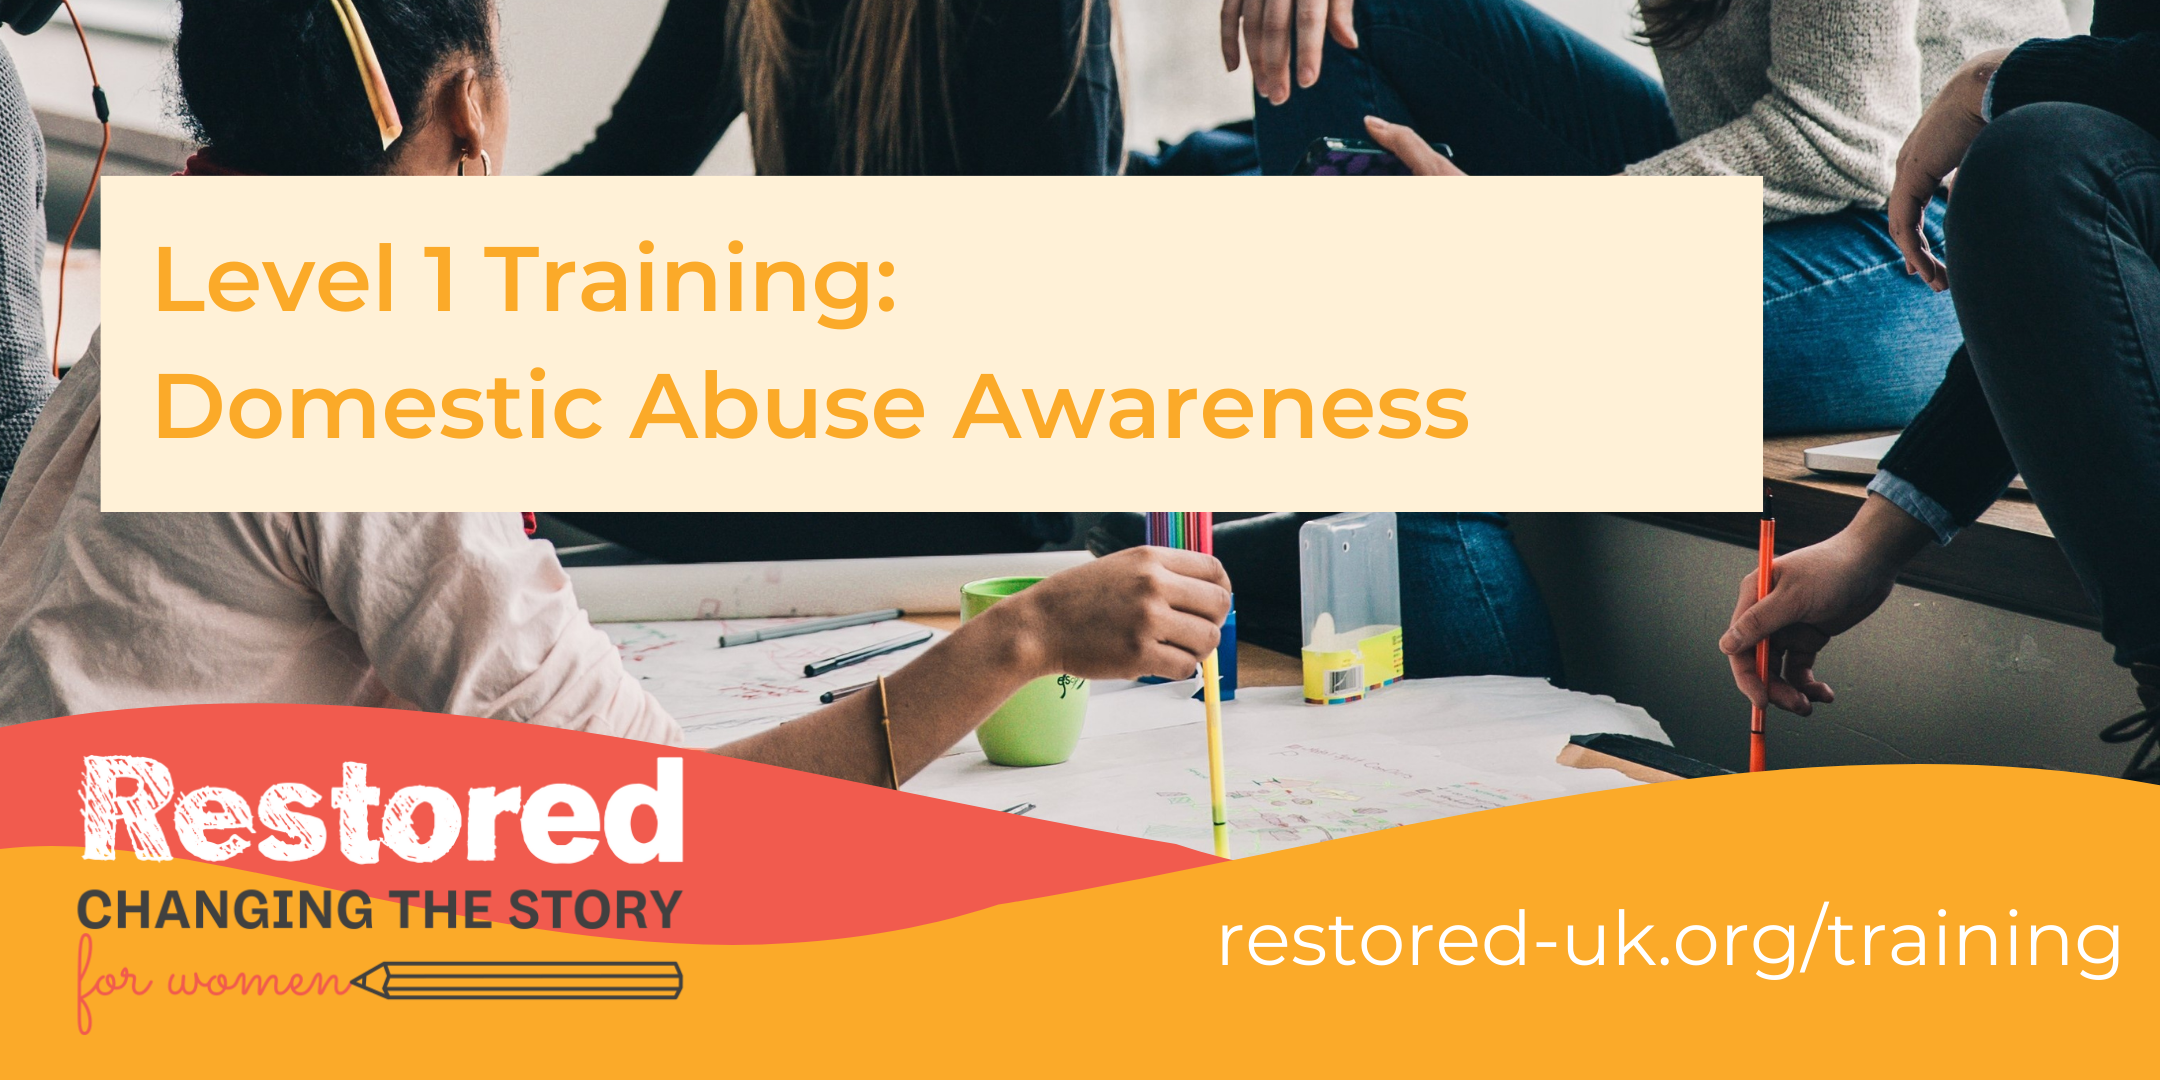 Level 1 Training: Domestic Abuse Awareness